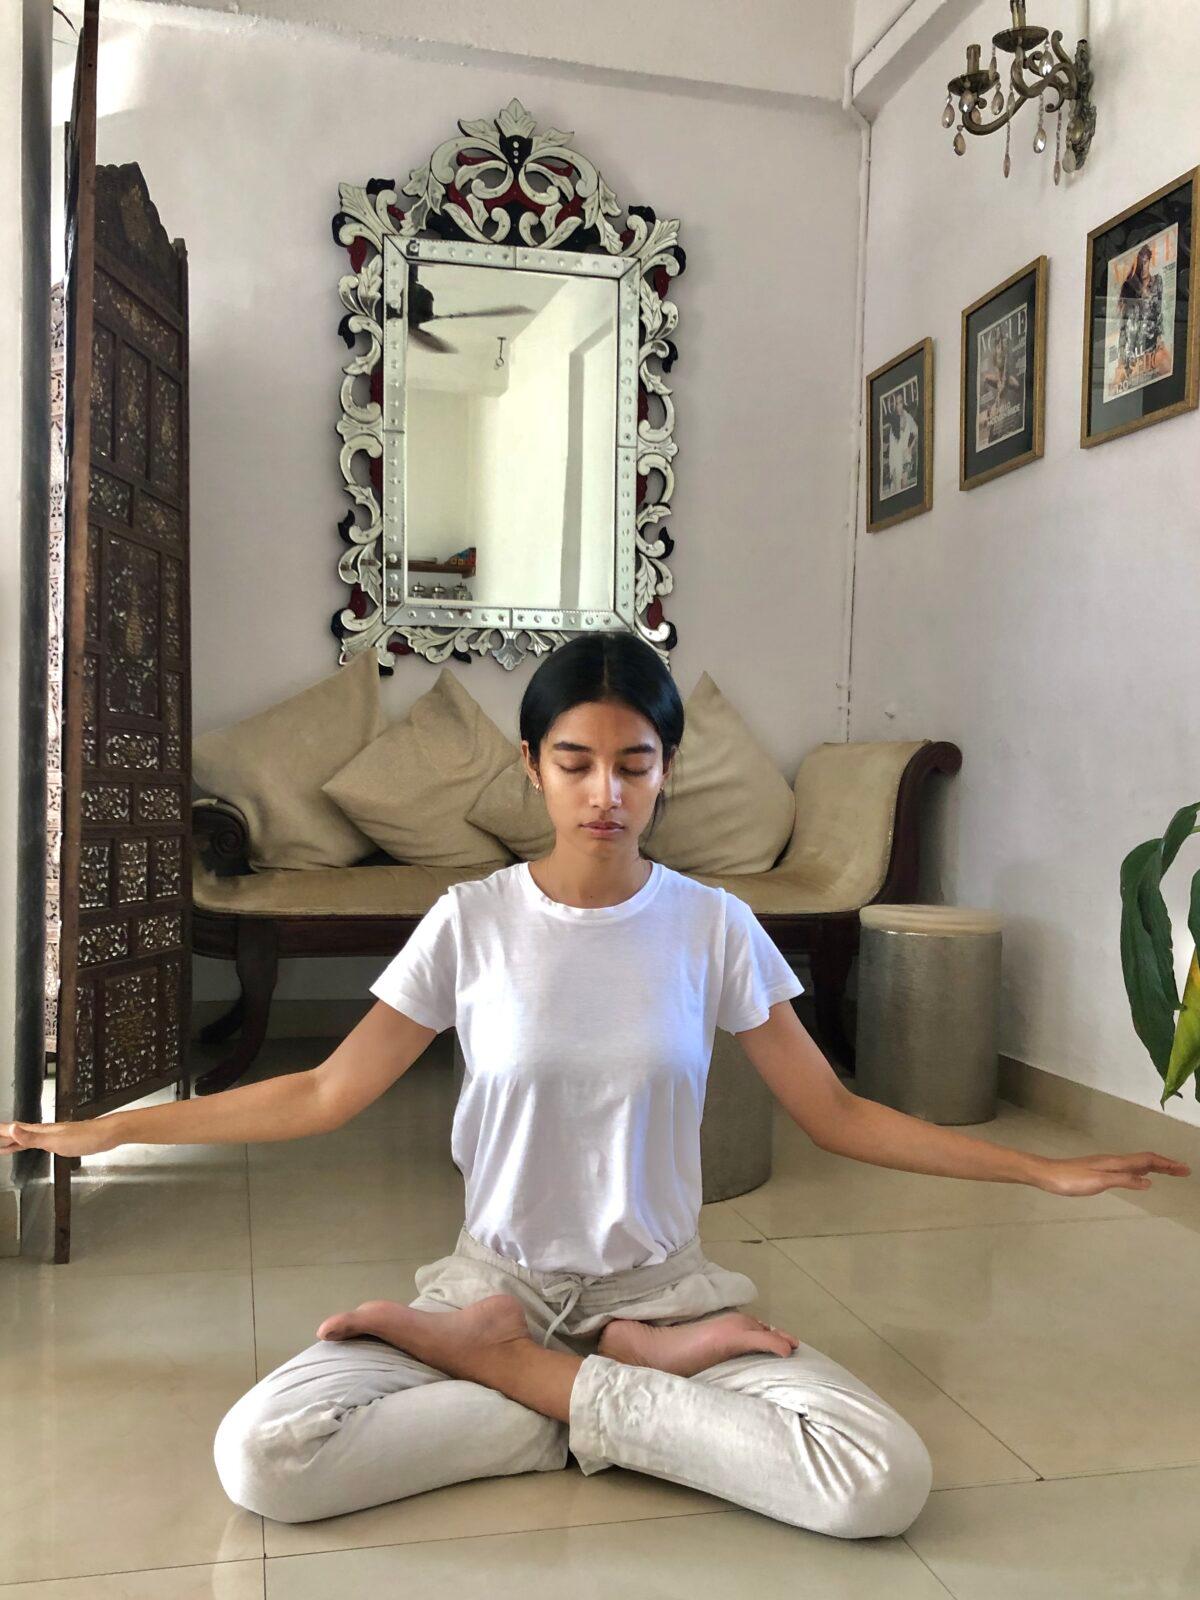  Sumaya Hazarika practicing the fifth set of Falun Gong exercises indoors. (Courtesy of Mark Luburic)